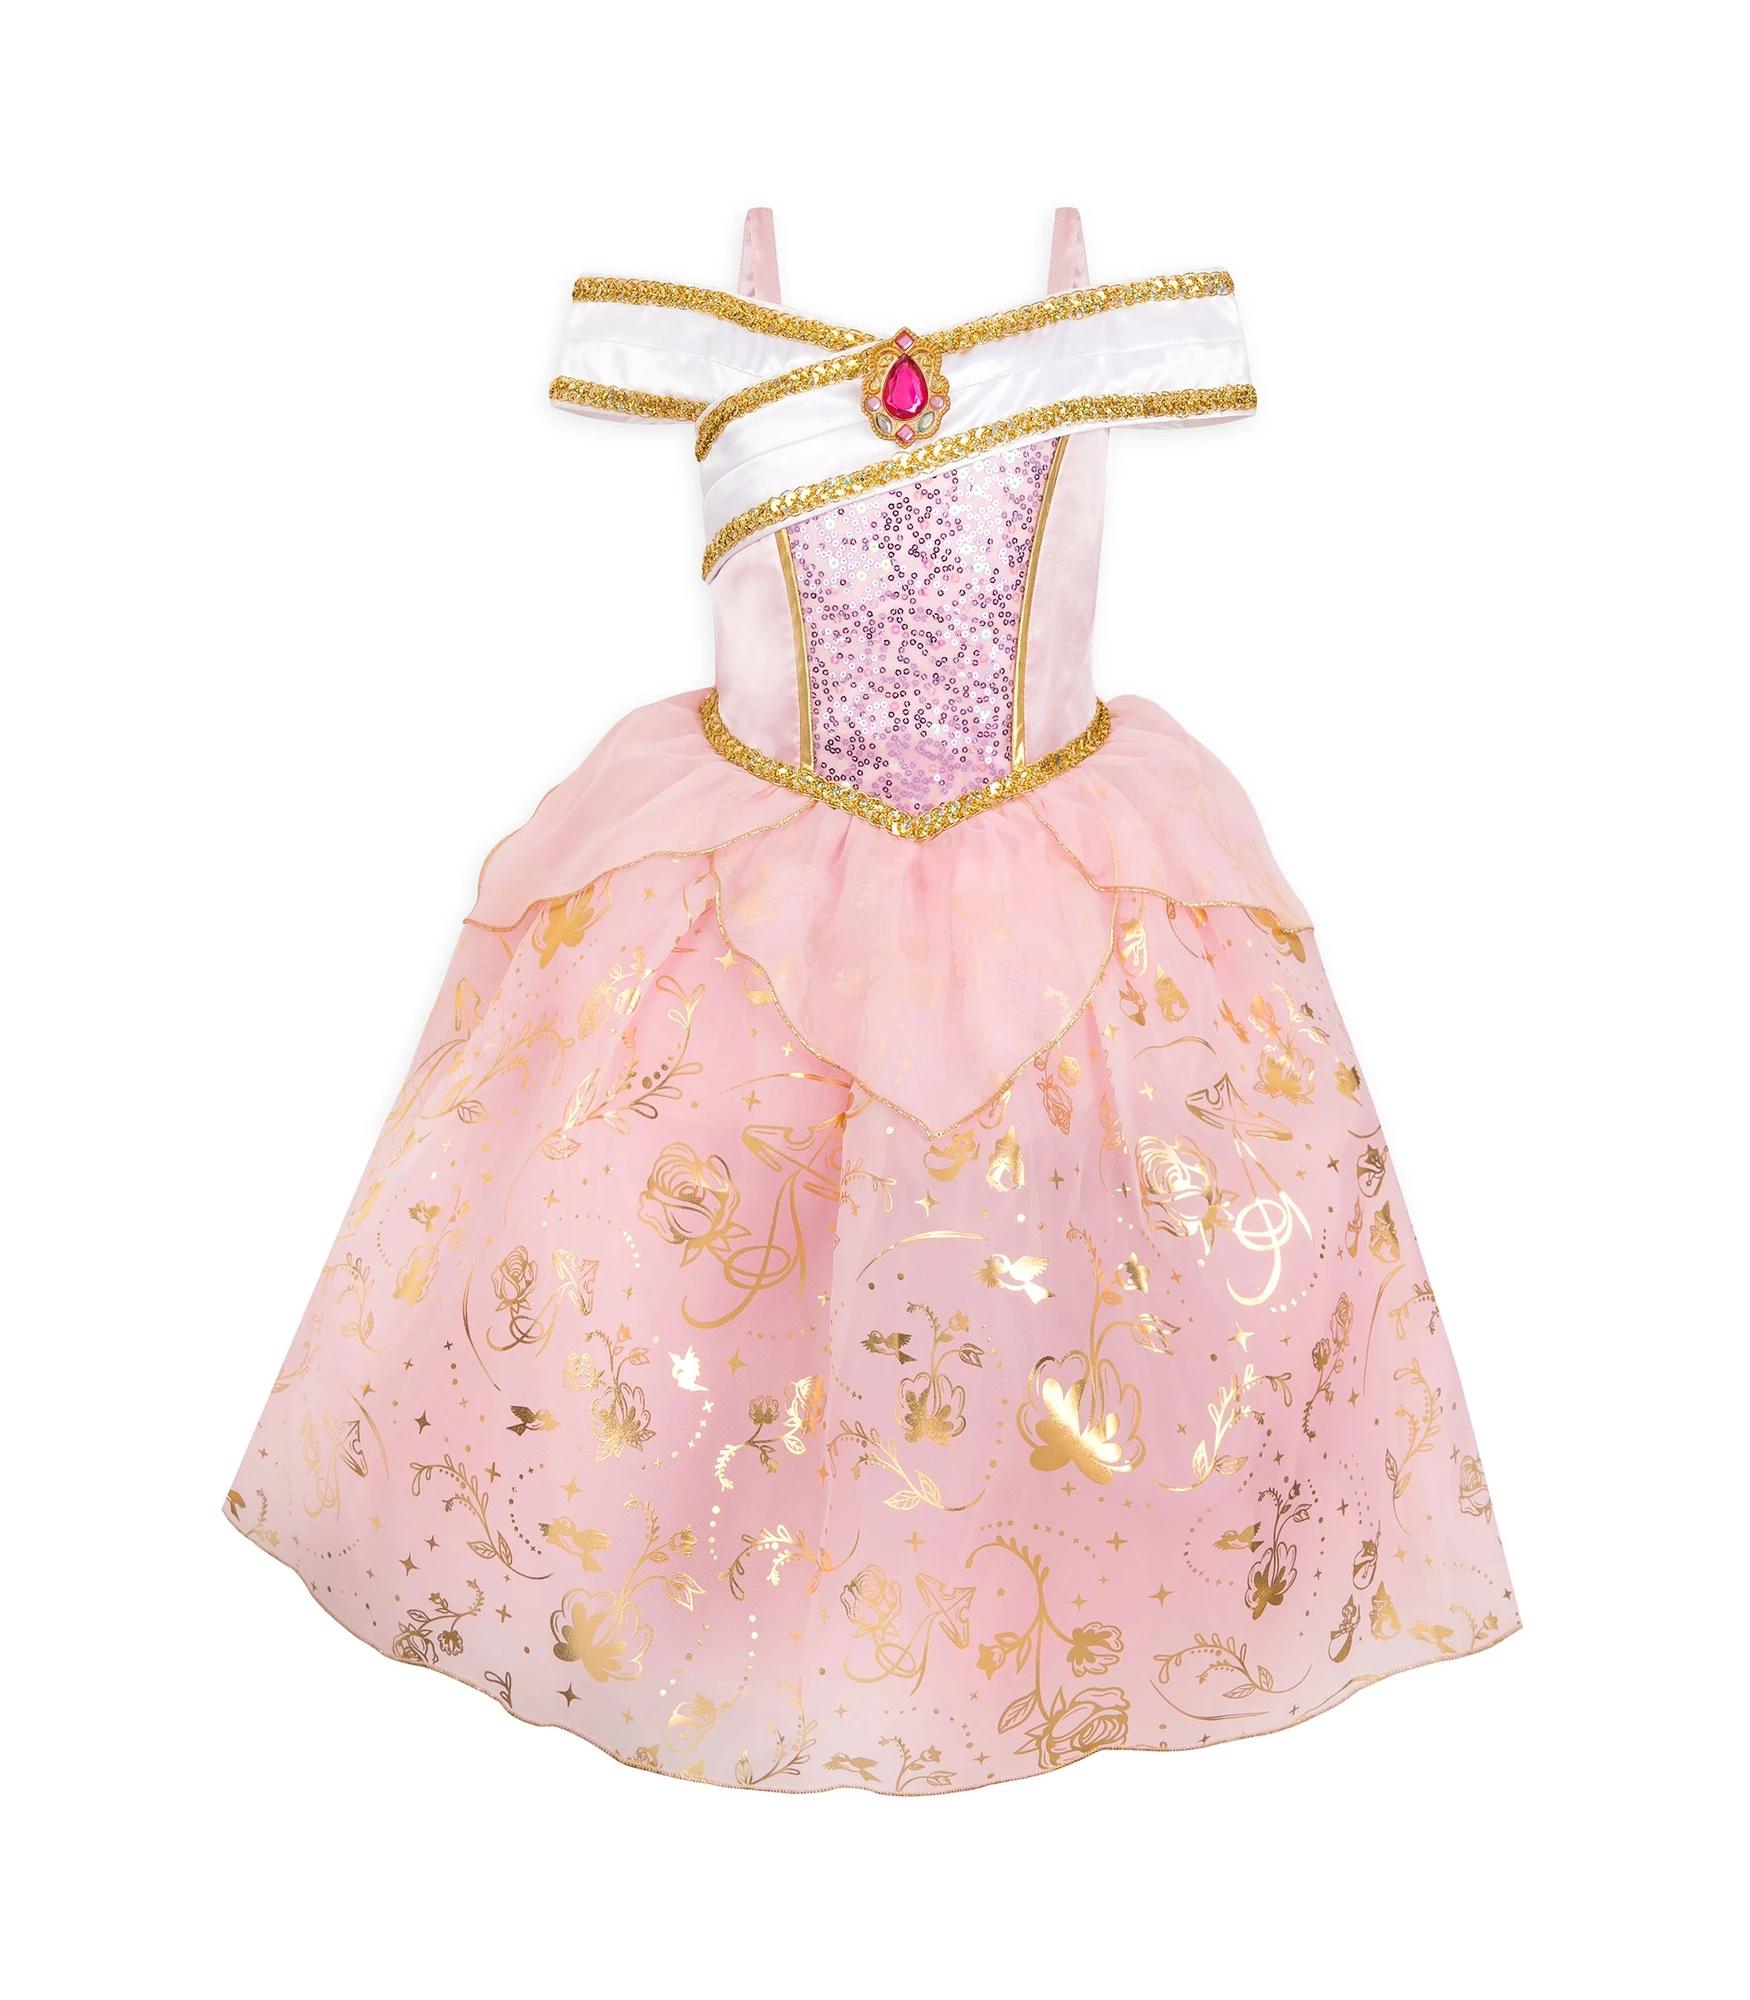 Disney Princess - Aurora - Costume for Kids - Sleeping Beauty